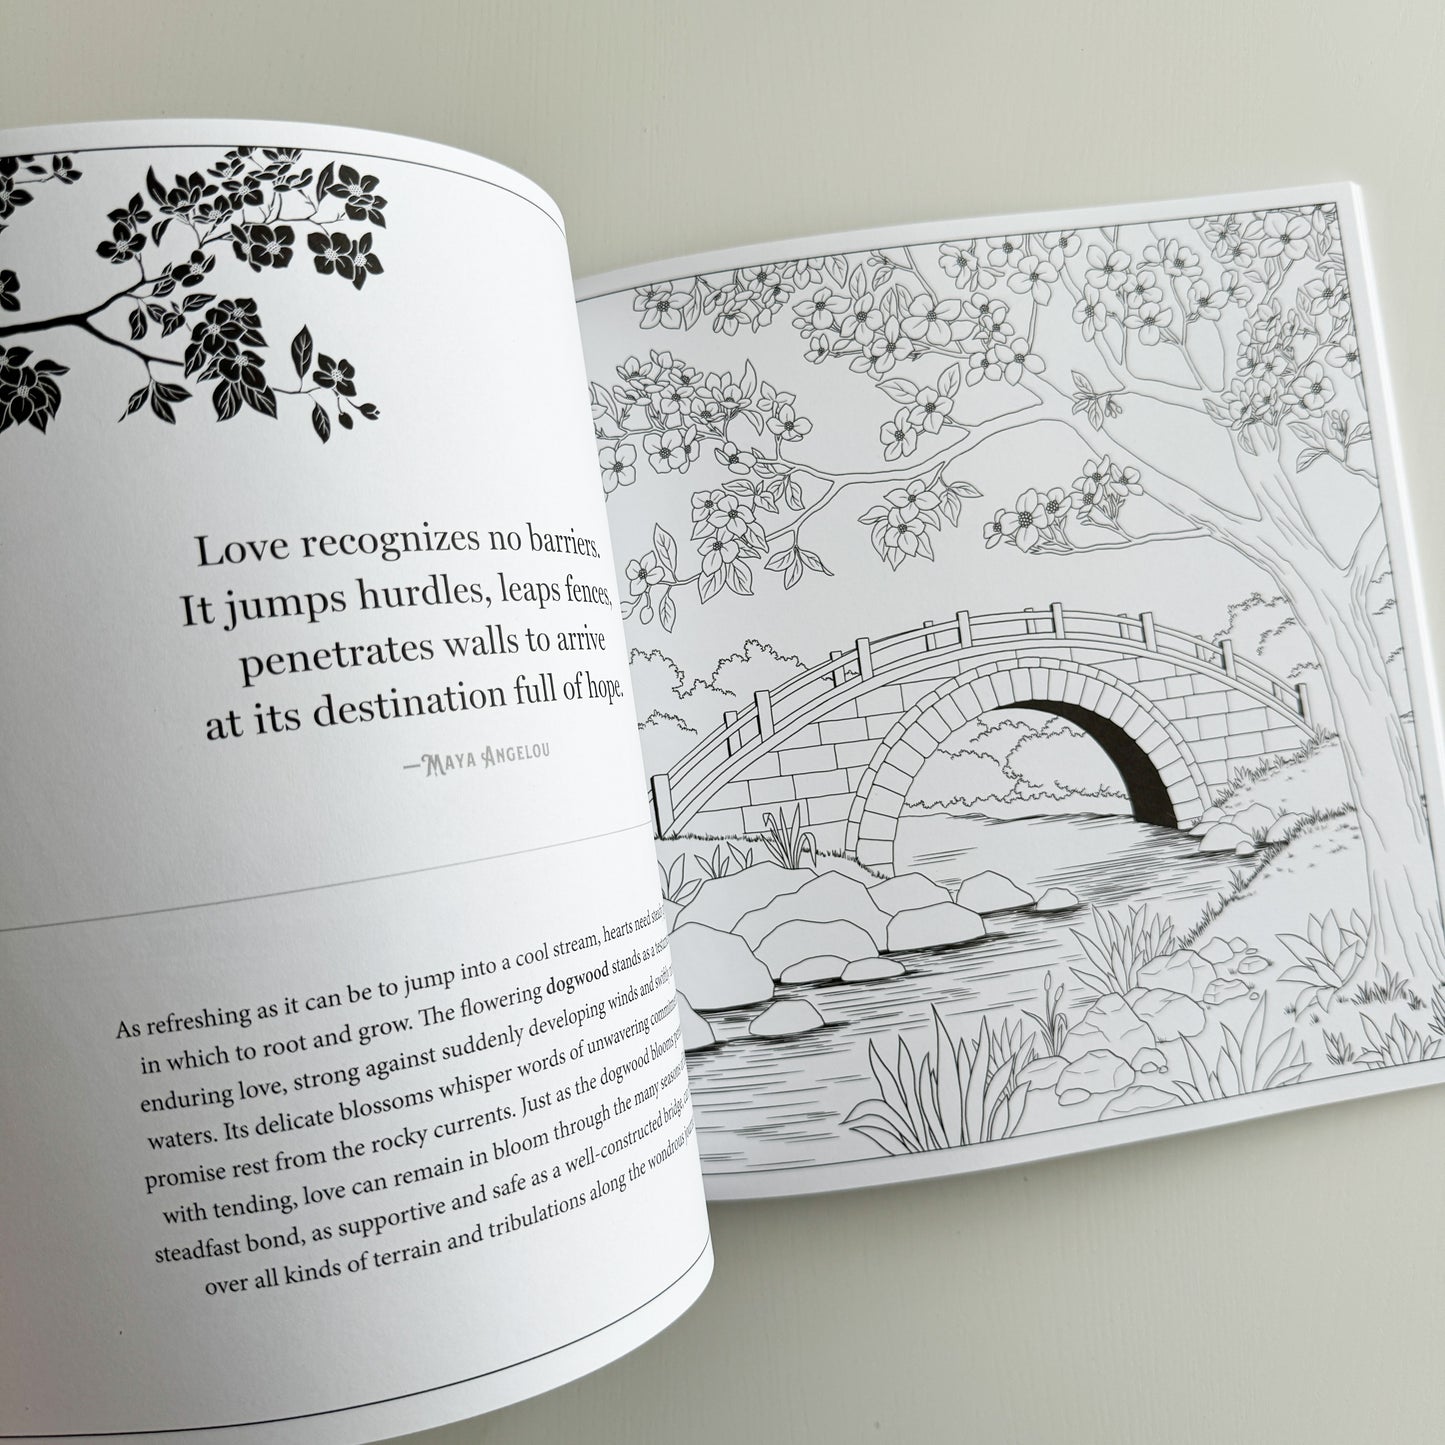 Floriographic: Secret Garden- An Artist's Coloring Book of the Hidden Language of Flowers